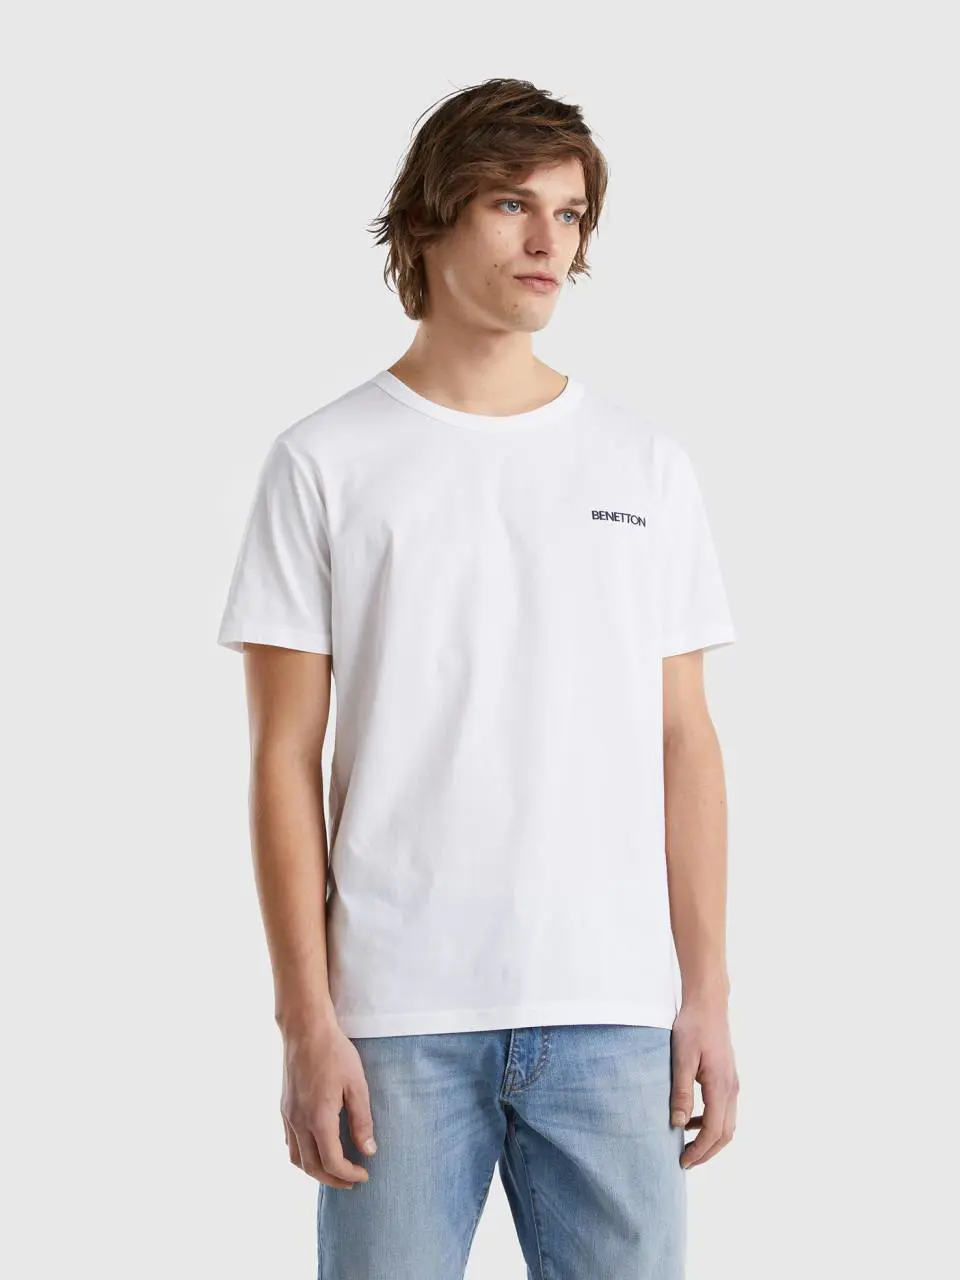 Benetton t-shirt in organic cotton with logo print. 1